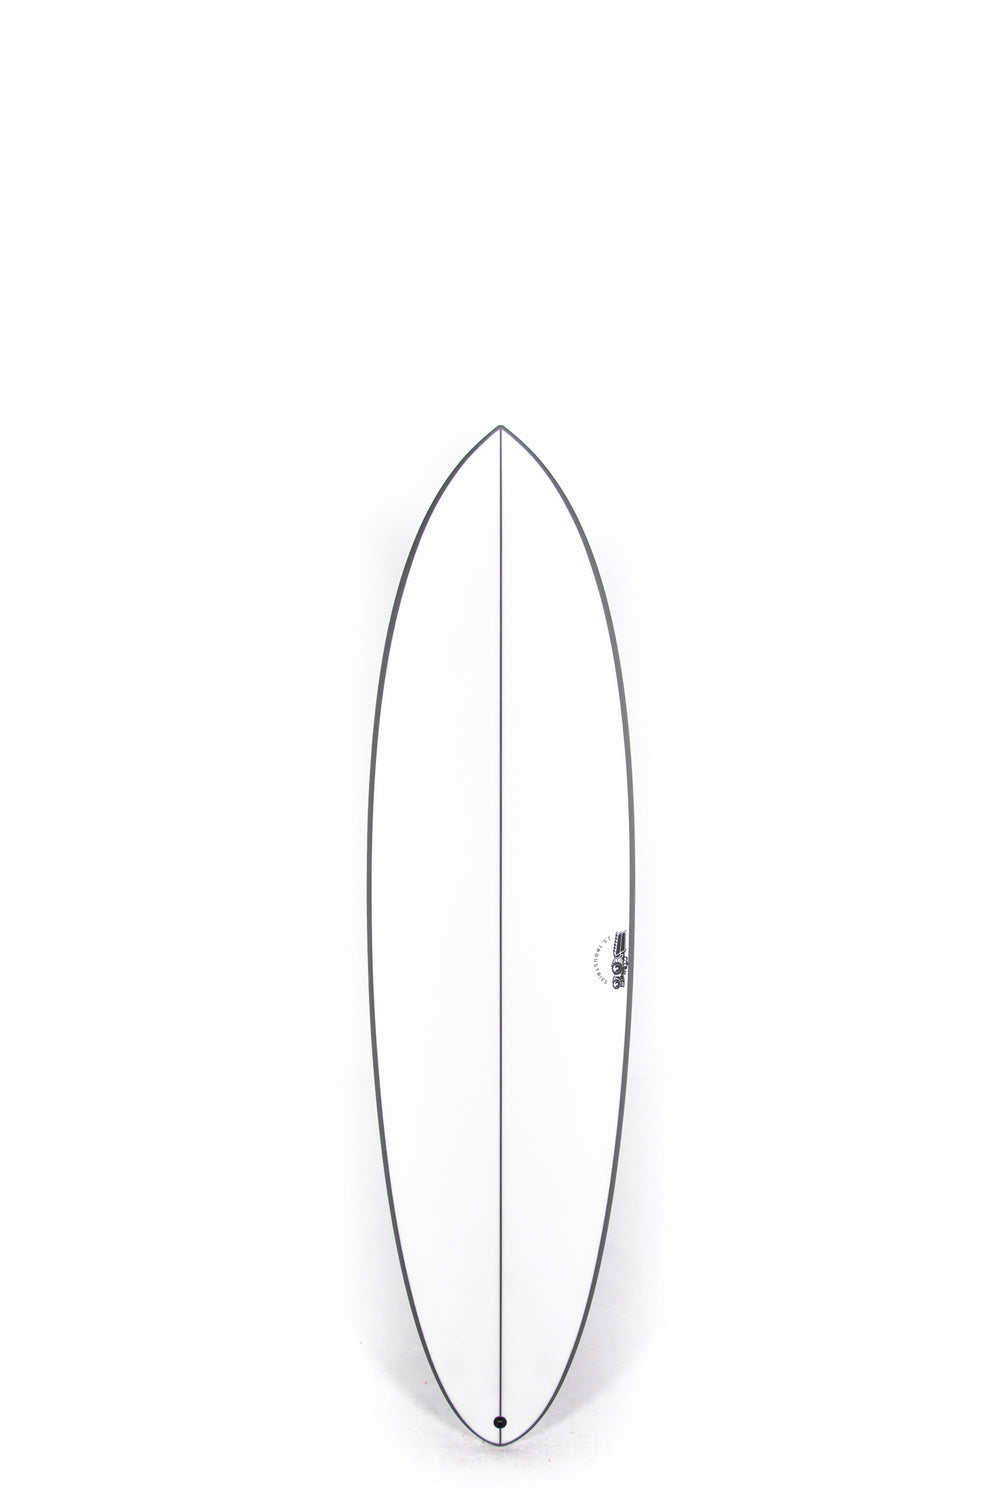 Pukas Surf Shop - JS Surfboards - EL BARON - 6'4